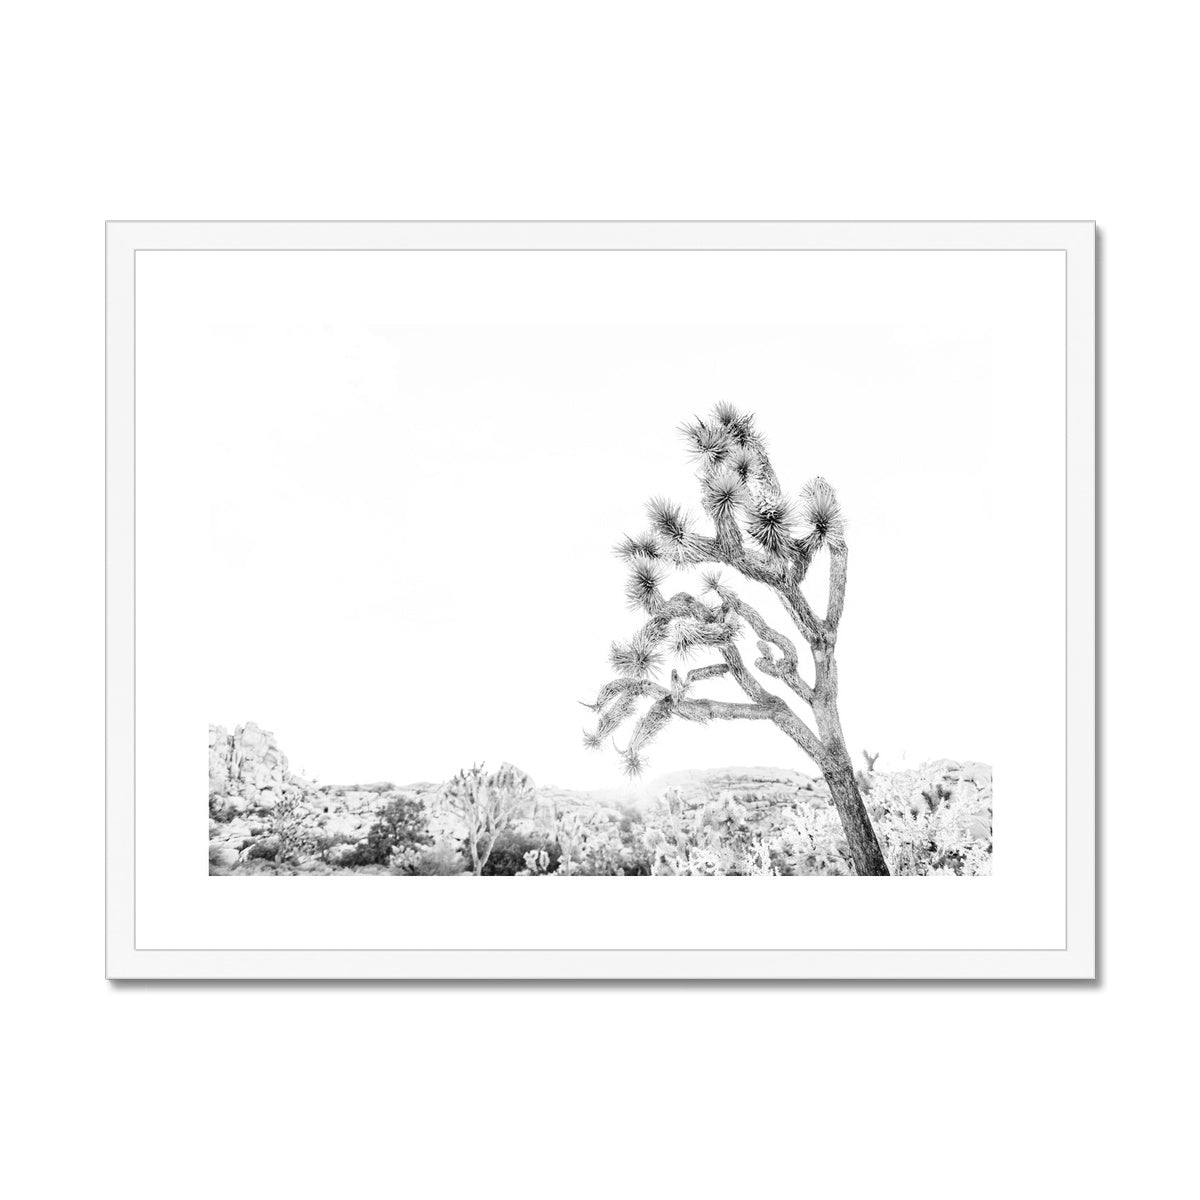 JOSHUA TREE V BW Framed & Mounted Print